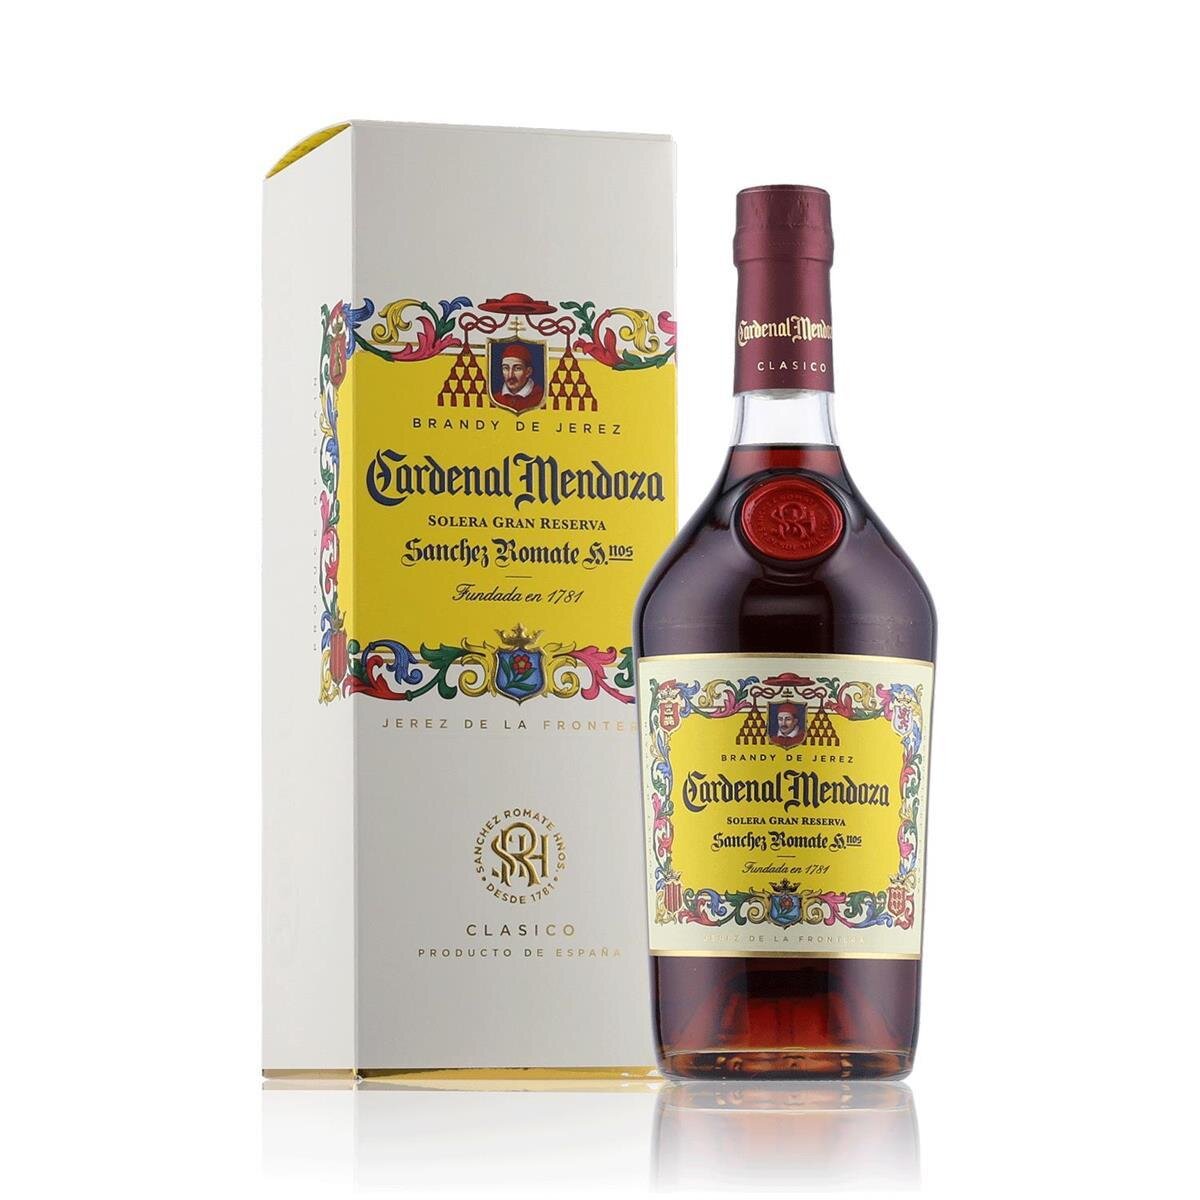 Cardenal Mendoza Solera Gran Reserva 0,7l Geschenk Brandy 40% in Vol